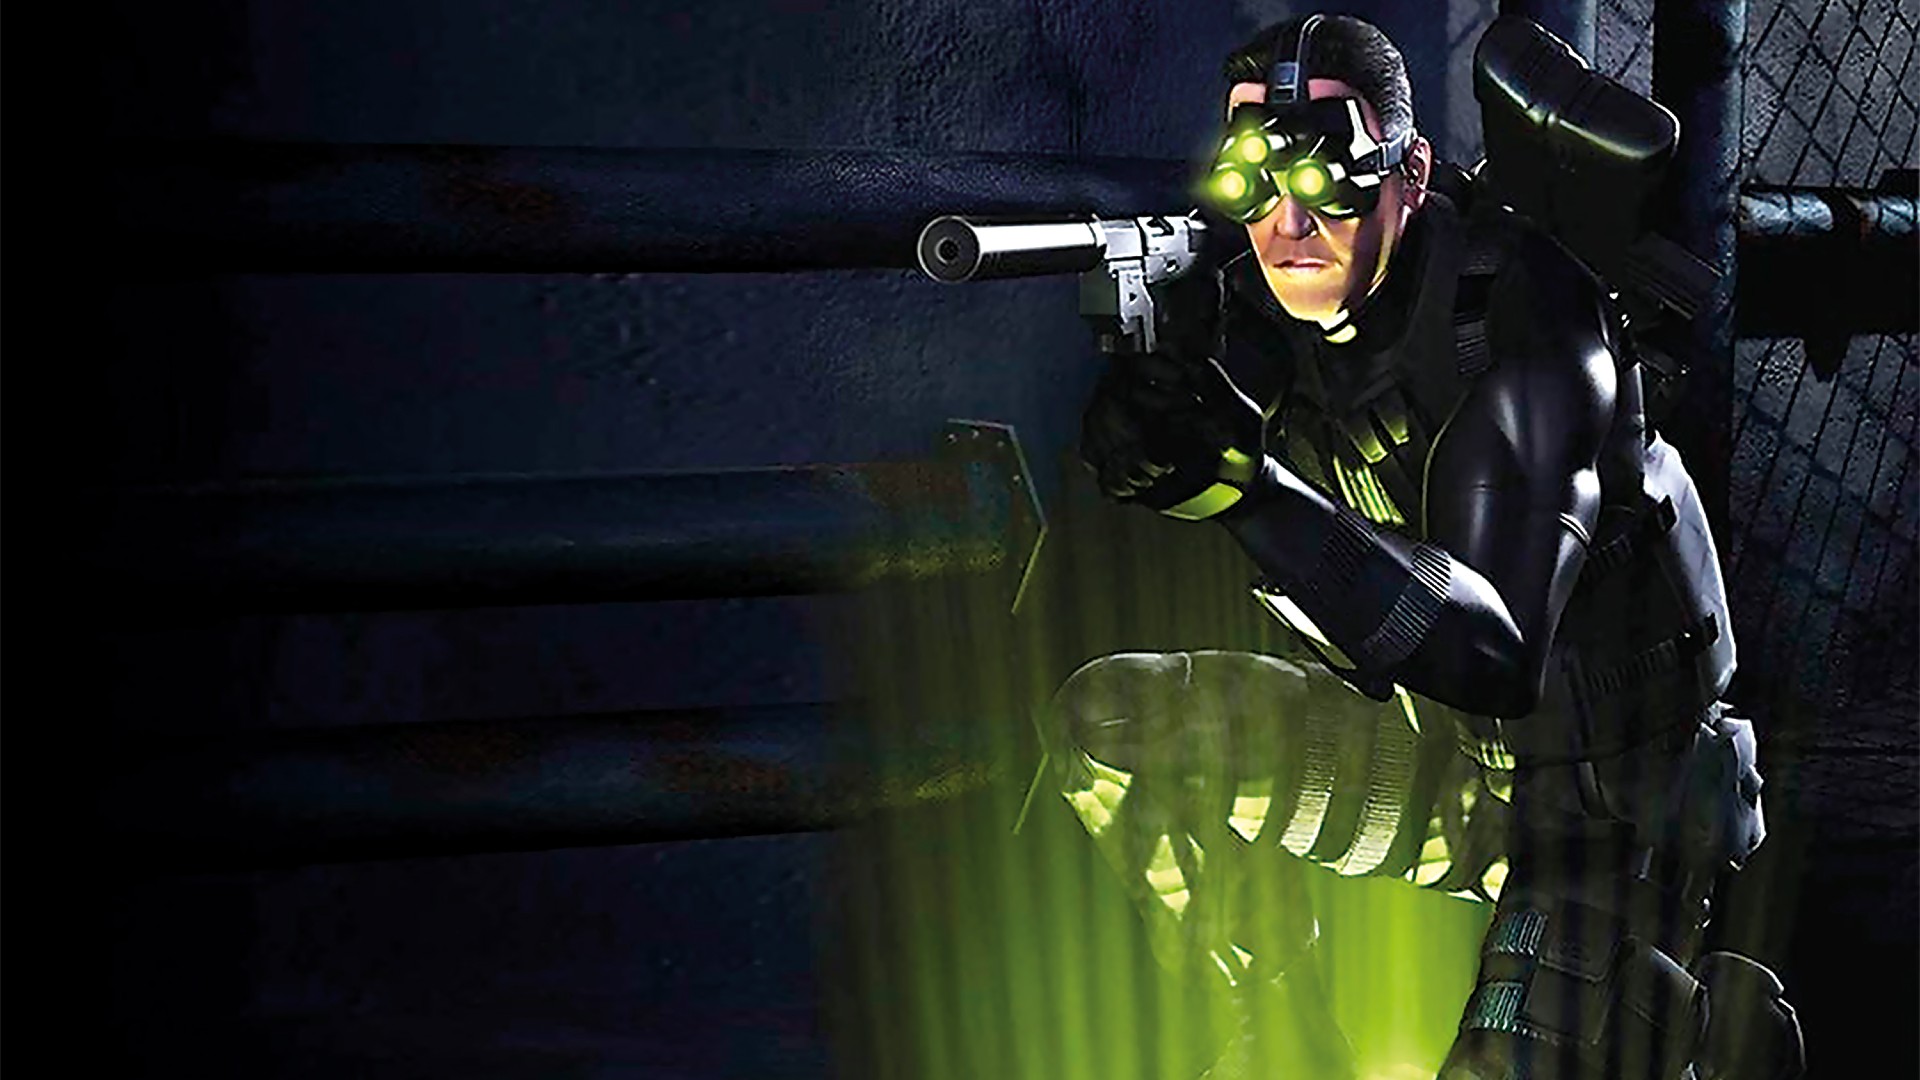 Splinter Cell remake from Ubisoft Toronto made official